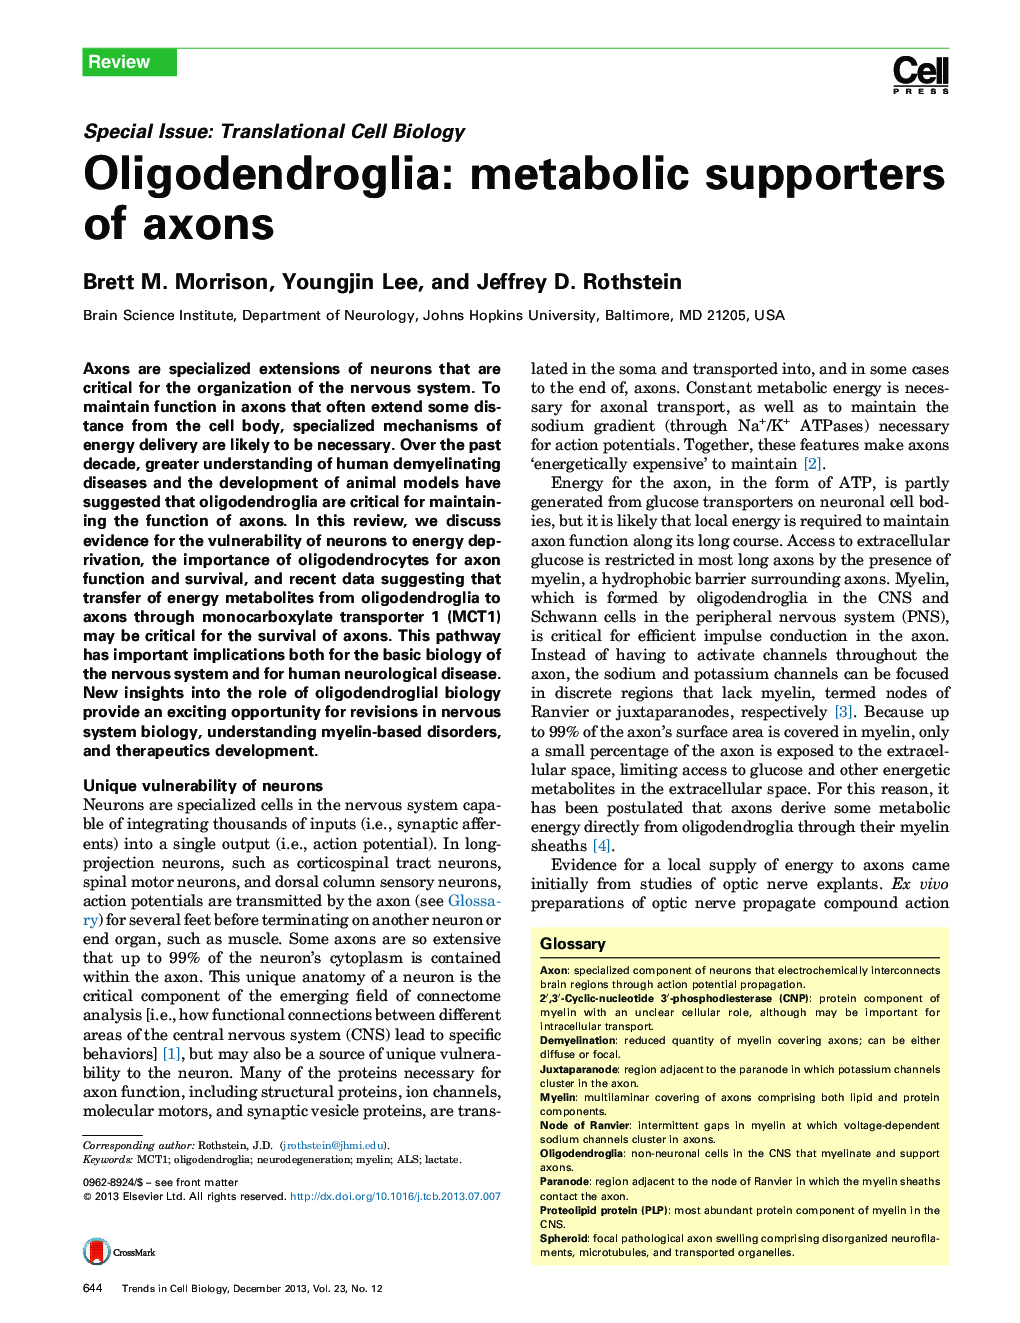 Oligodendroglia: metabolic supporters of axons